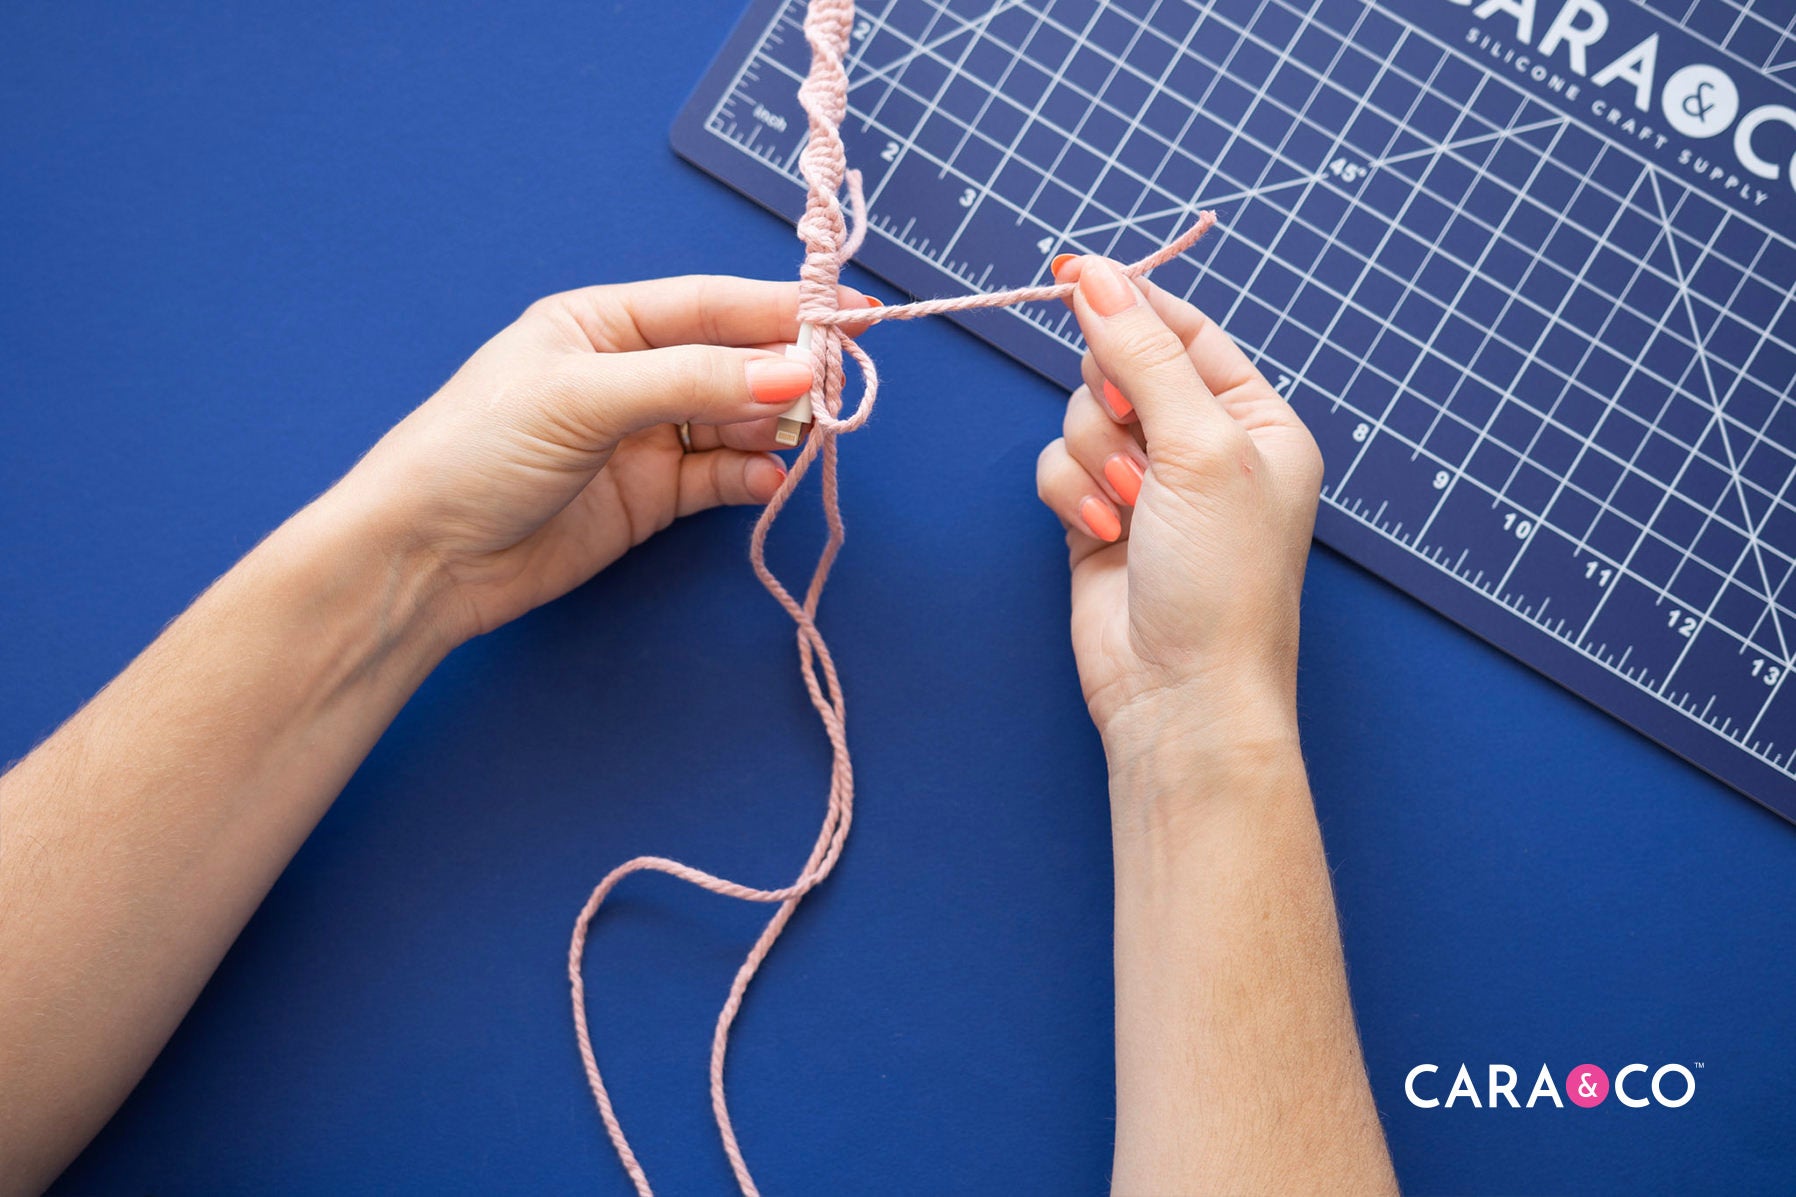 Macrame braided phone charger cord - Cara & Co tutorials